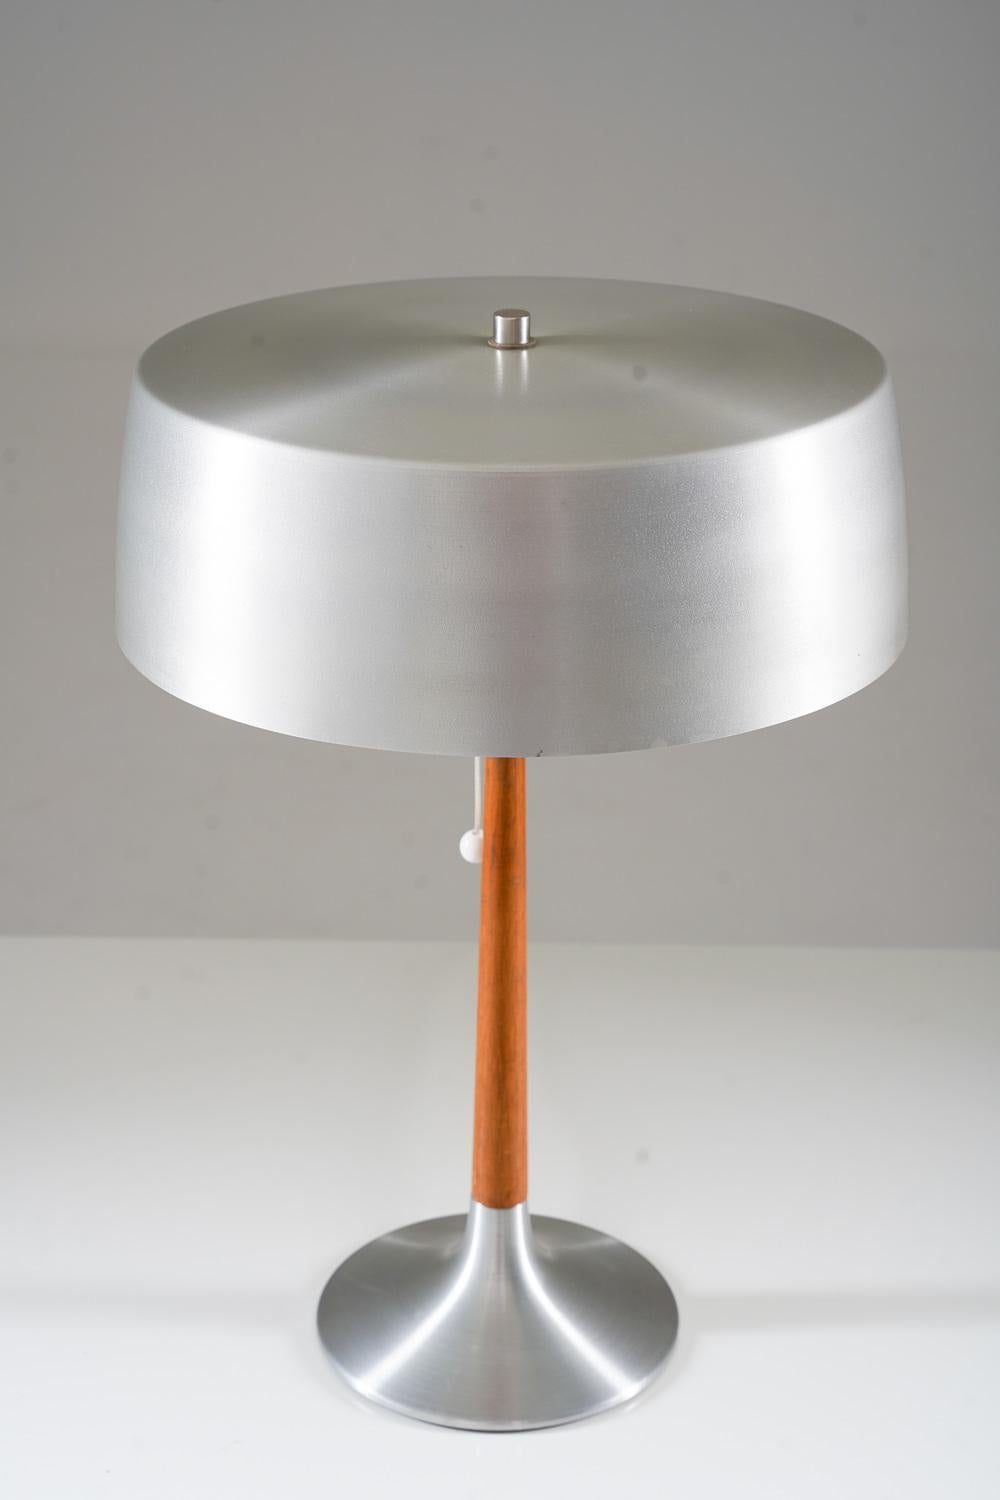 Scandinavian Modern Scandinavian Mid Century Table Lamp by ASEA For Sale